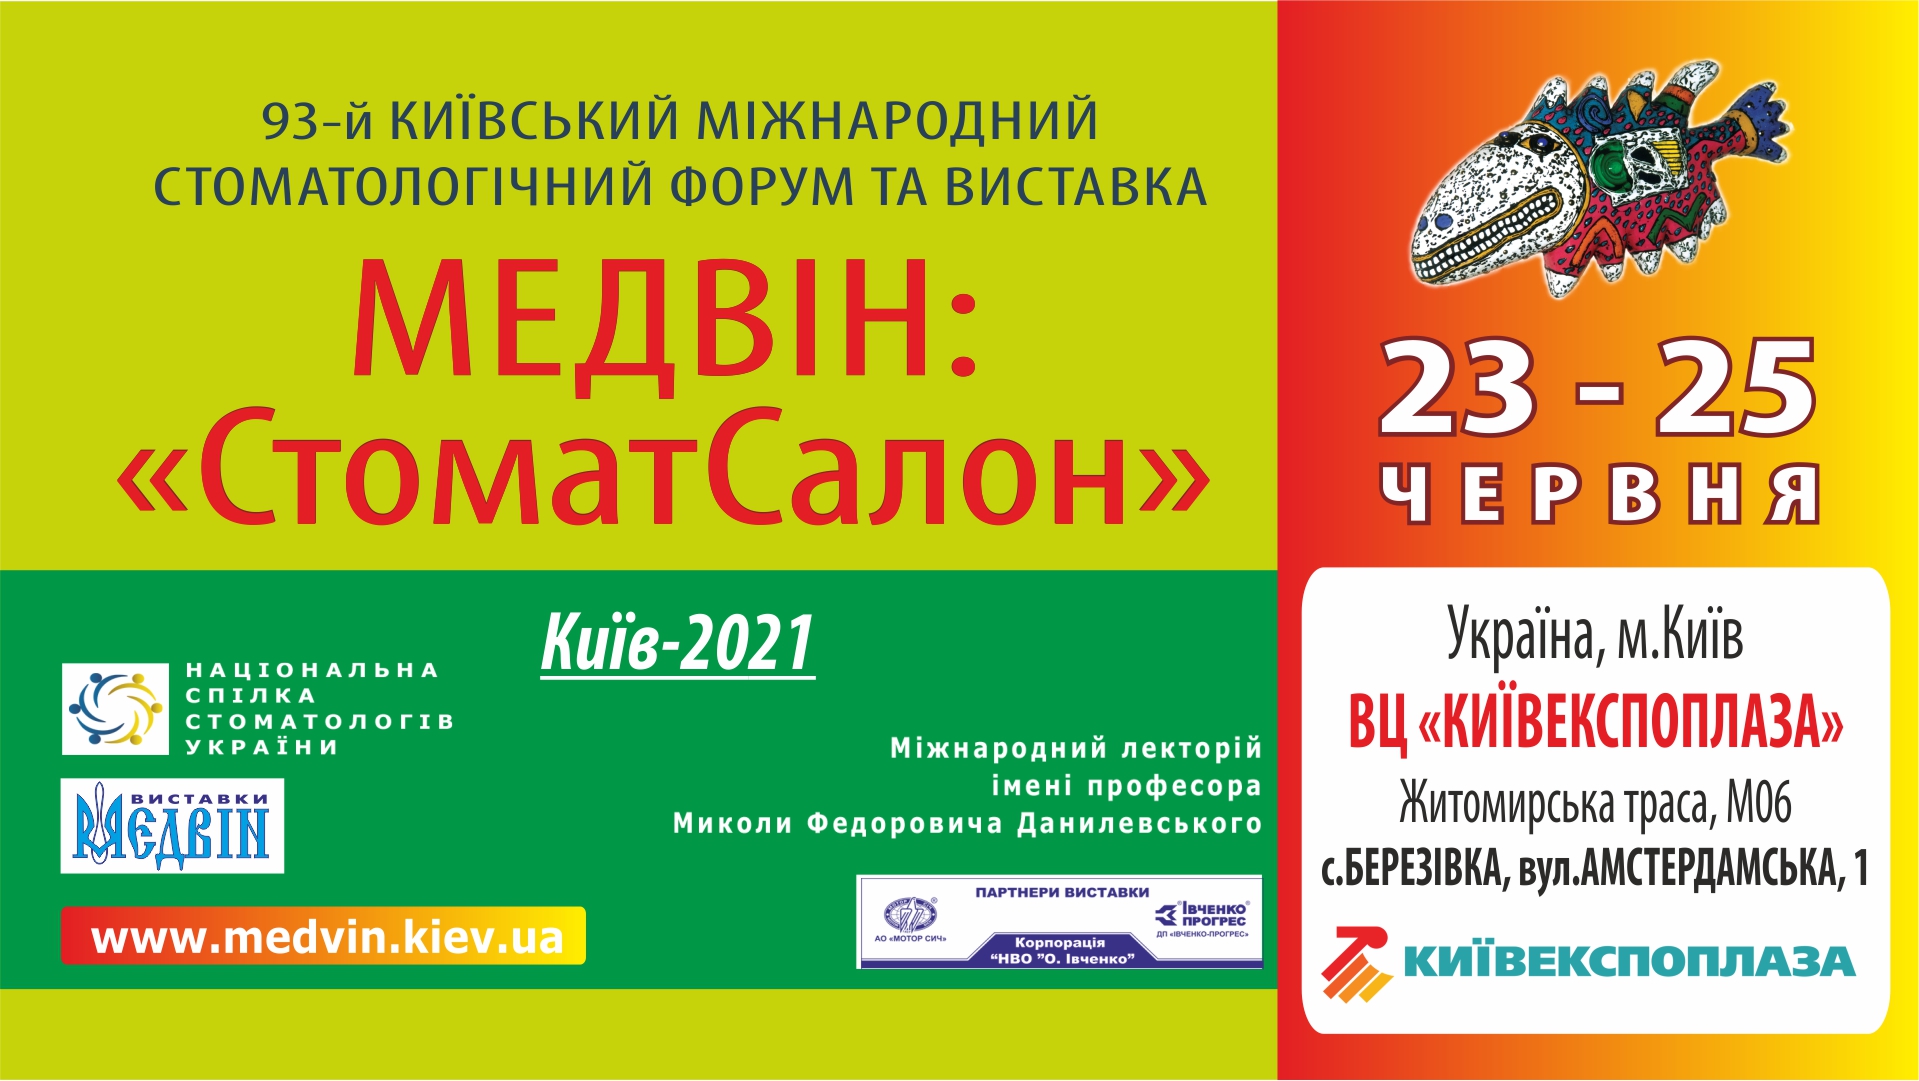 Билет на выставку "МЭДВИН: СтоматСалон" - КИЕВ, 23-25 июня 2021